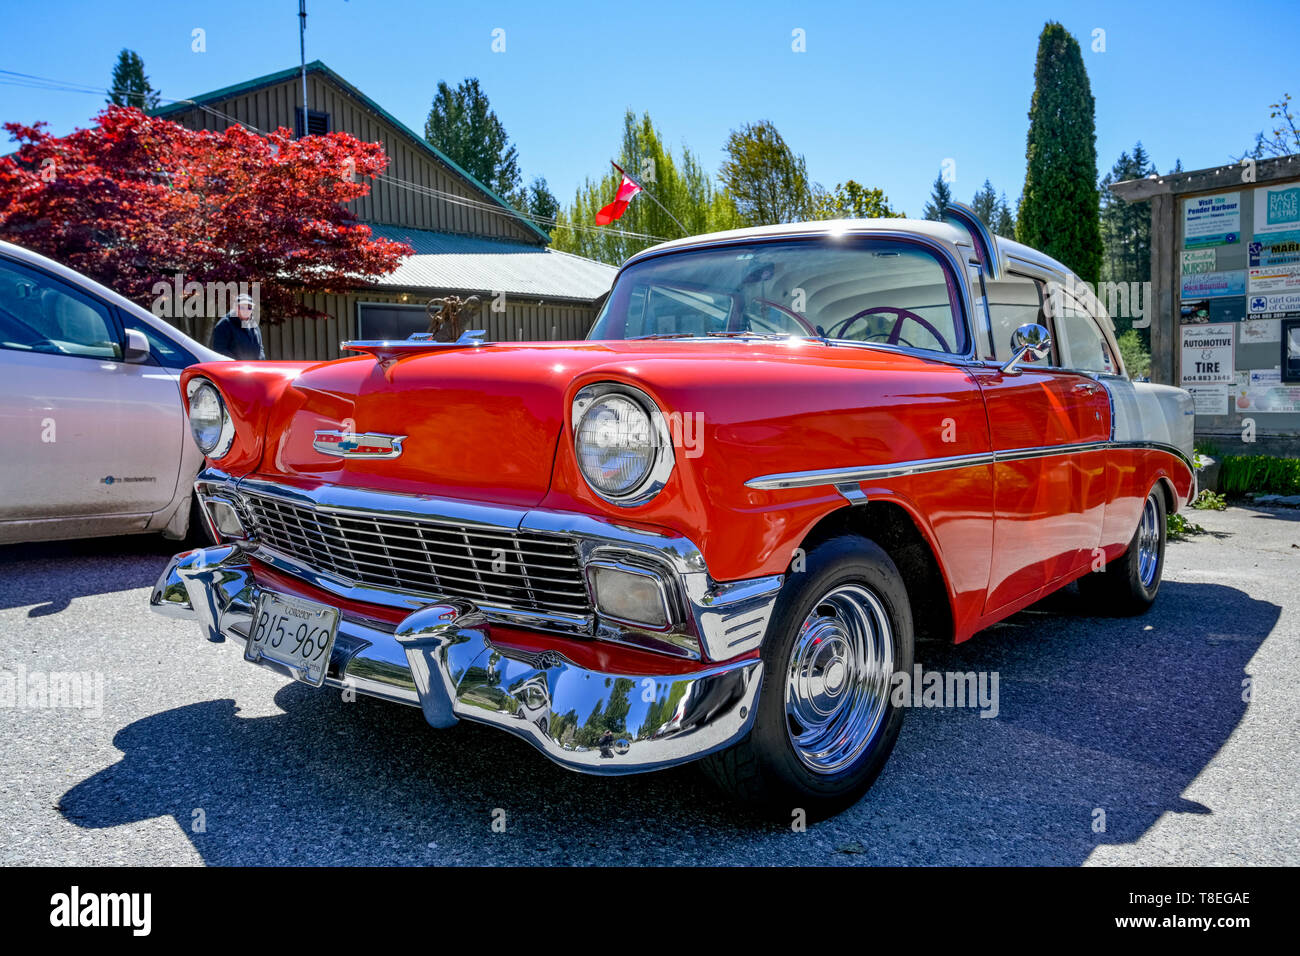 Vintage, red, Chevrolet, automobile, car Stock Photo